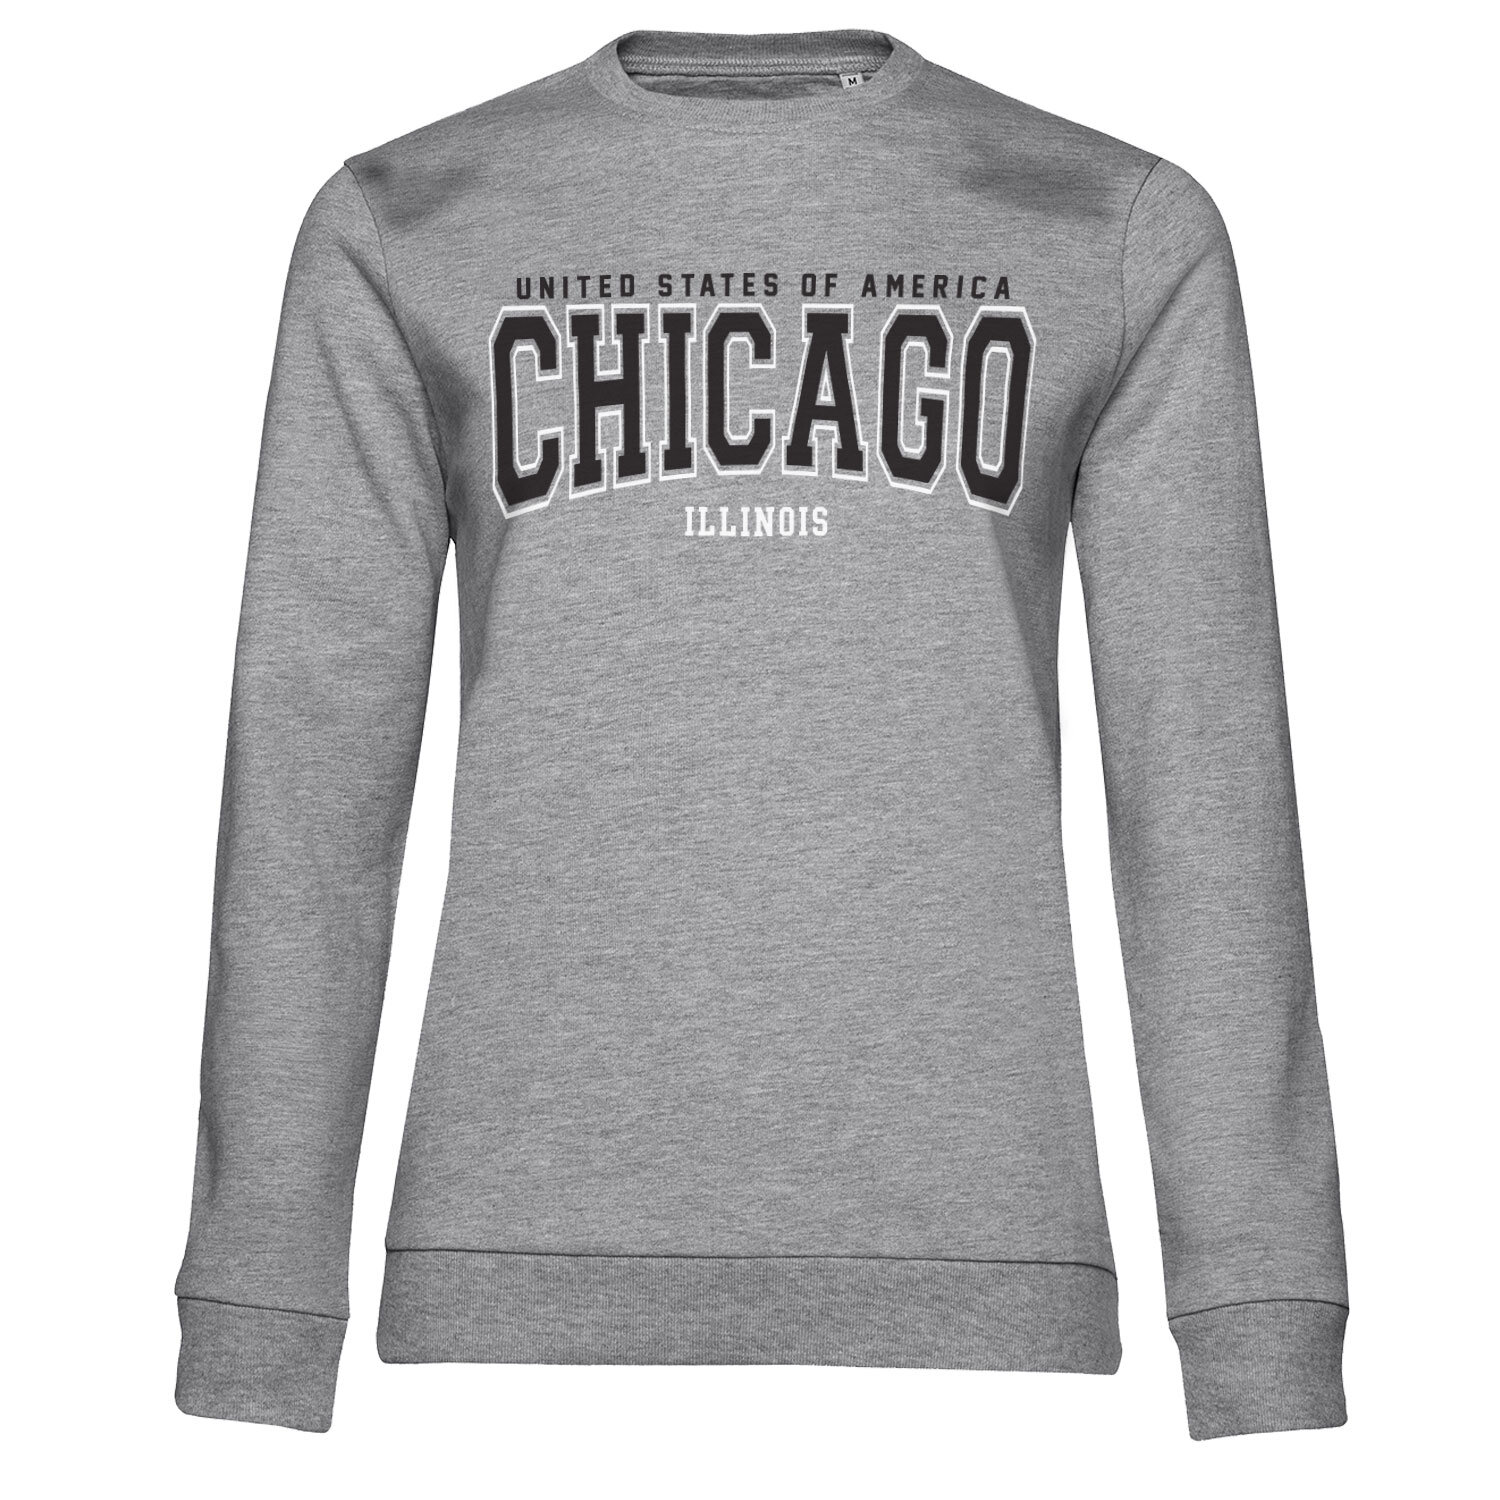 Chicago - Illinois Girly Sweatshirt